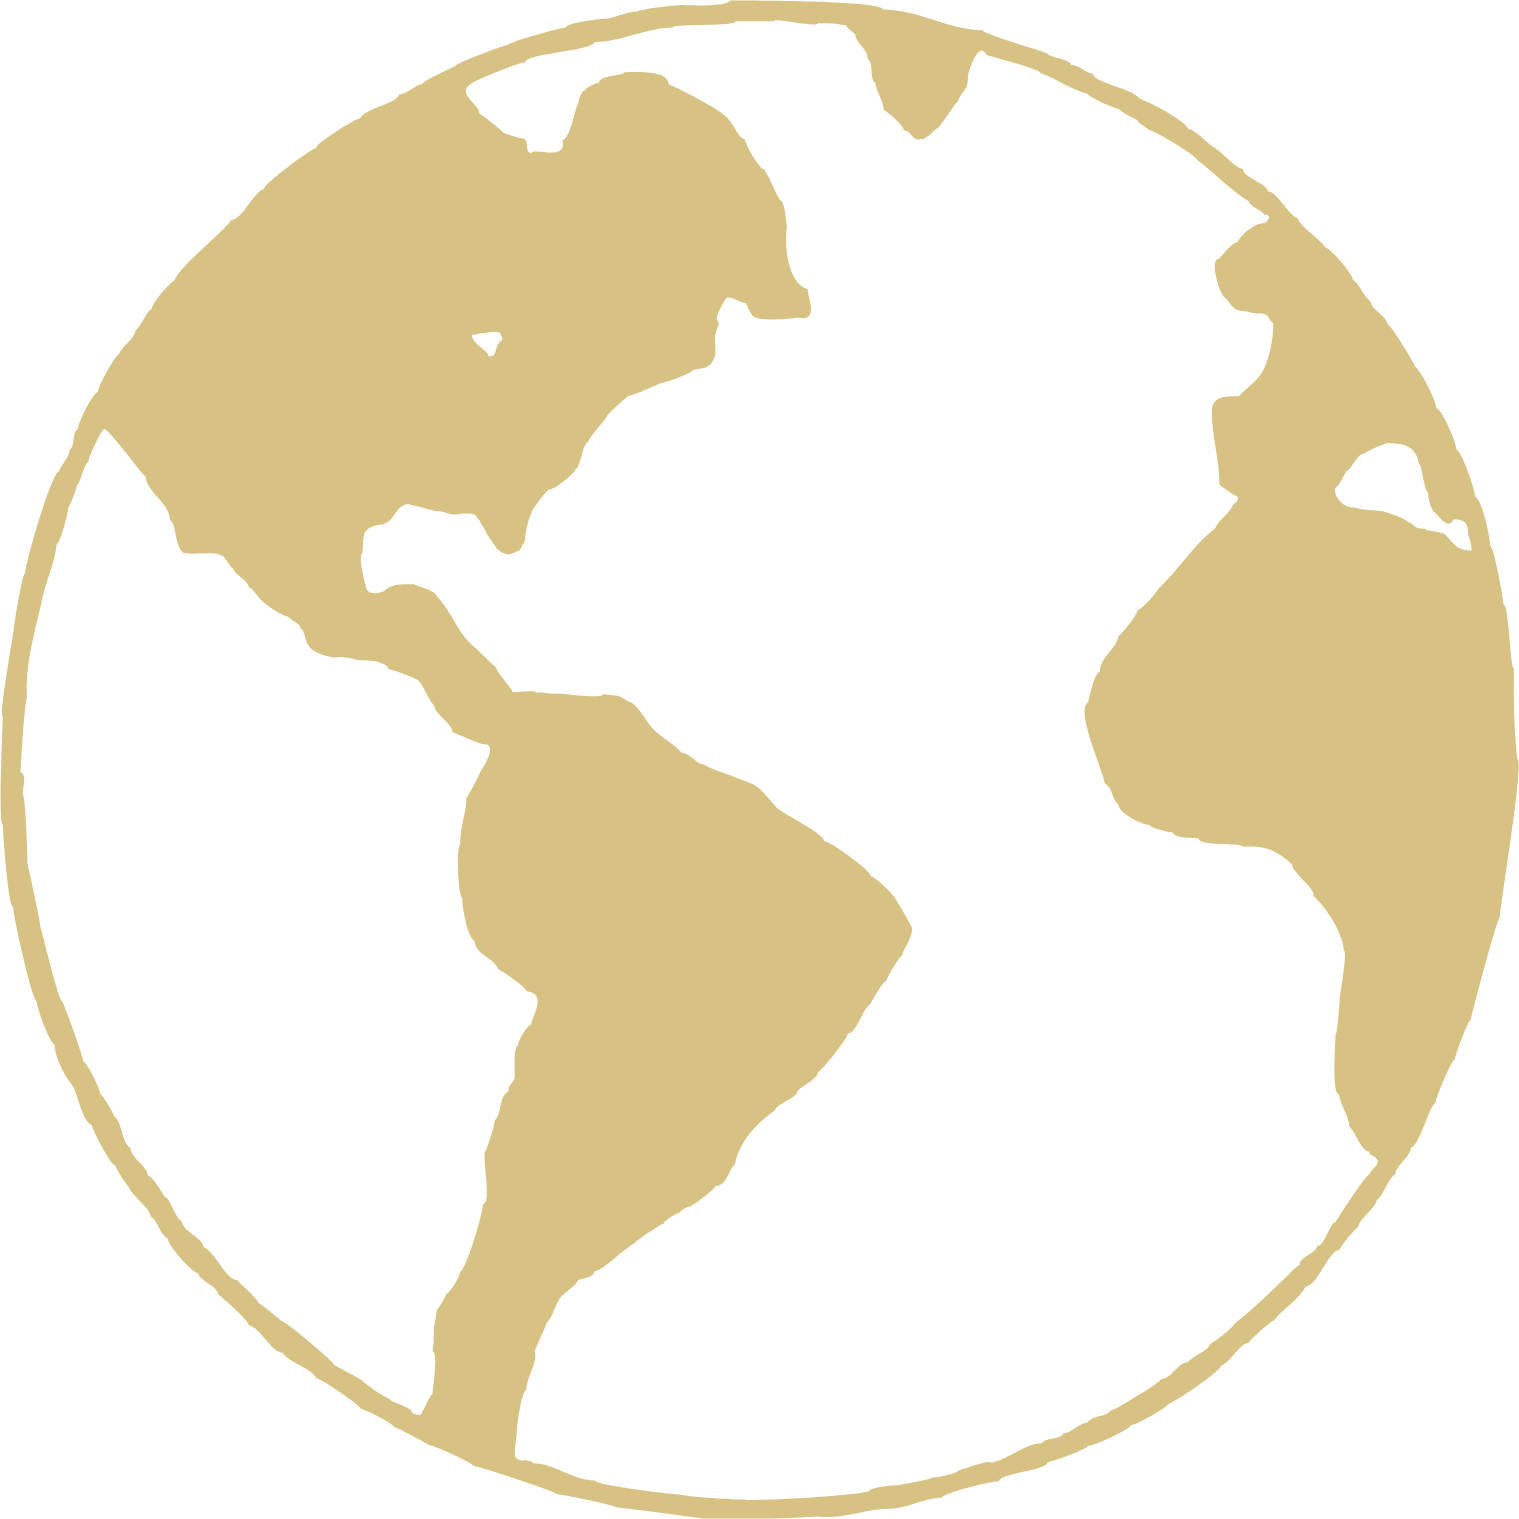 Seaboard logo pour fonds sombres (PNG transparent)